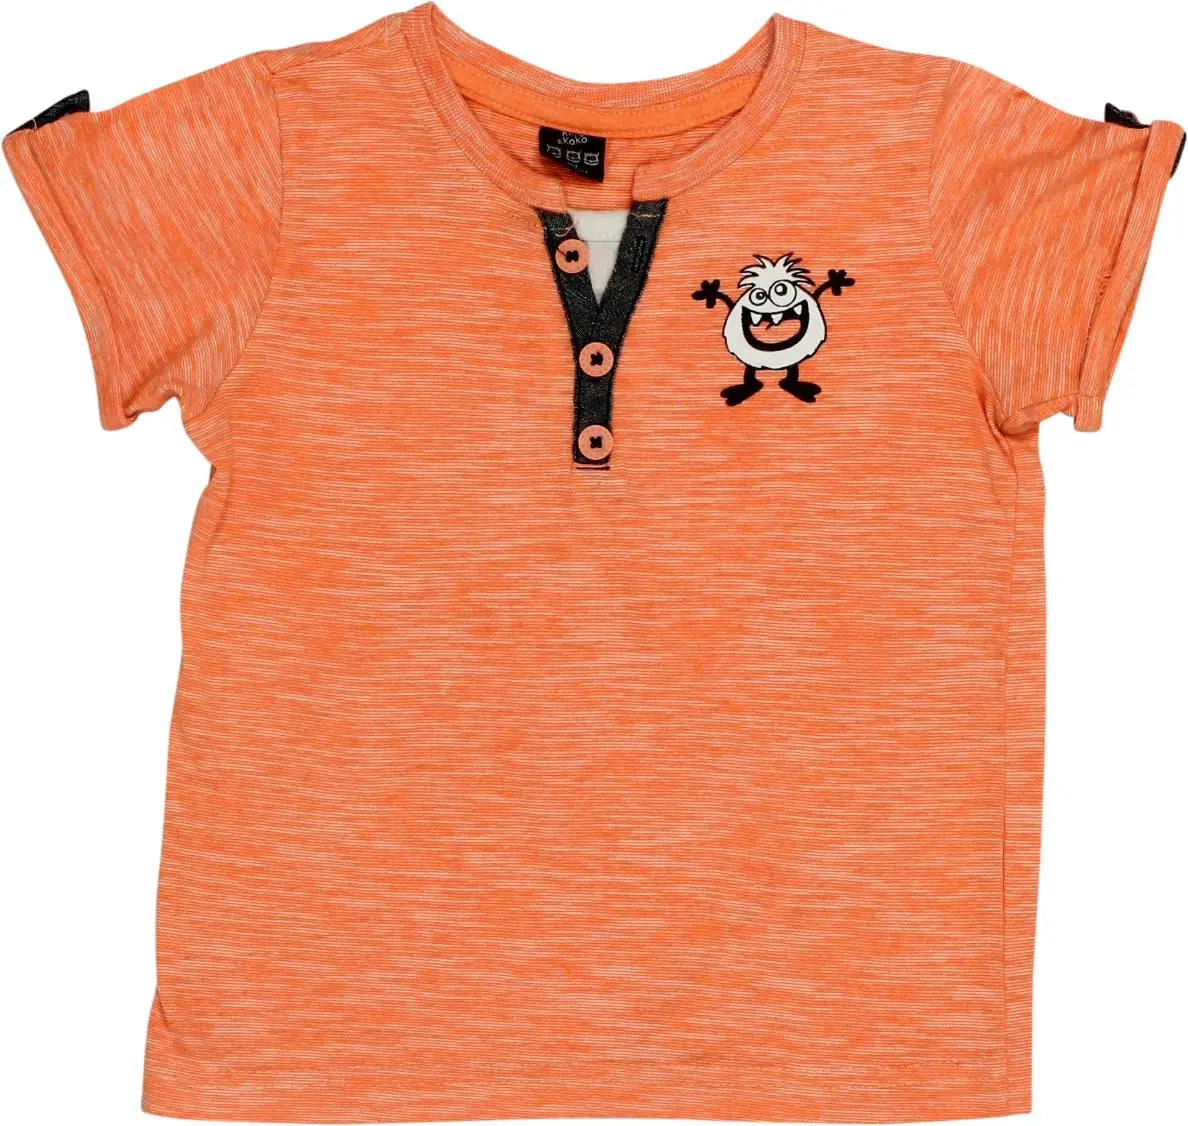 kiki & koko - Orange T-shirt- ThriftTale.com - Vintage and second handclothing